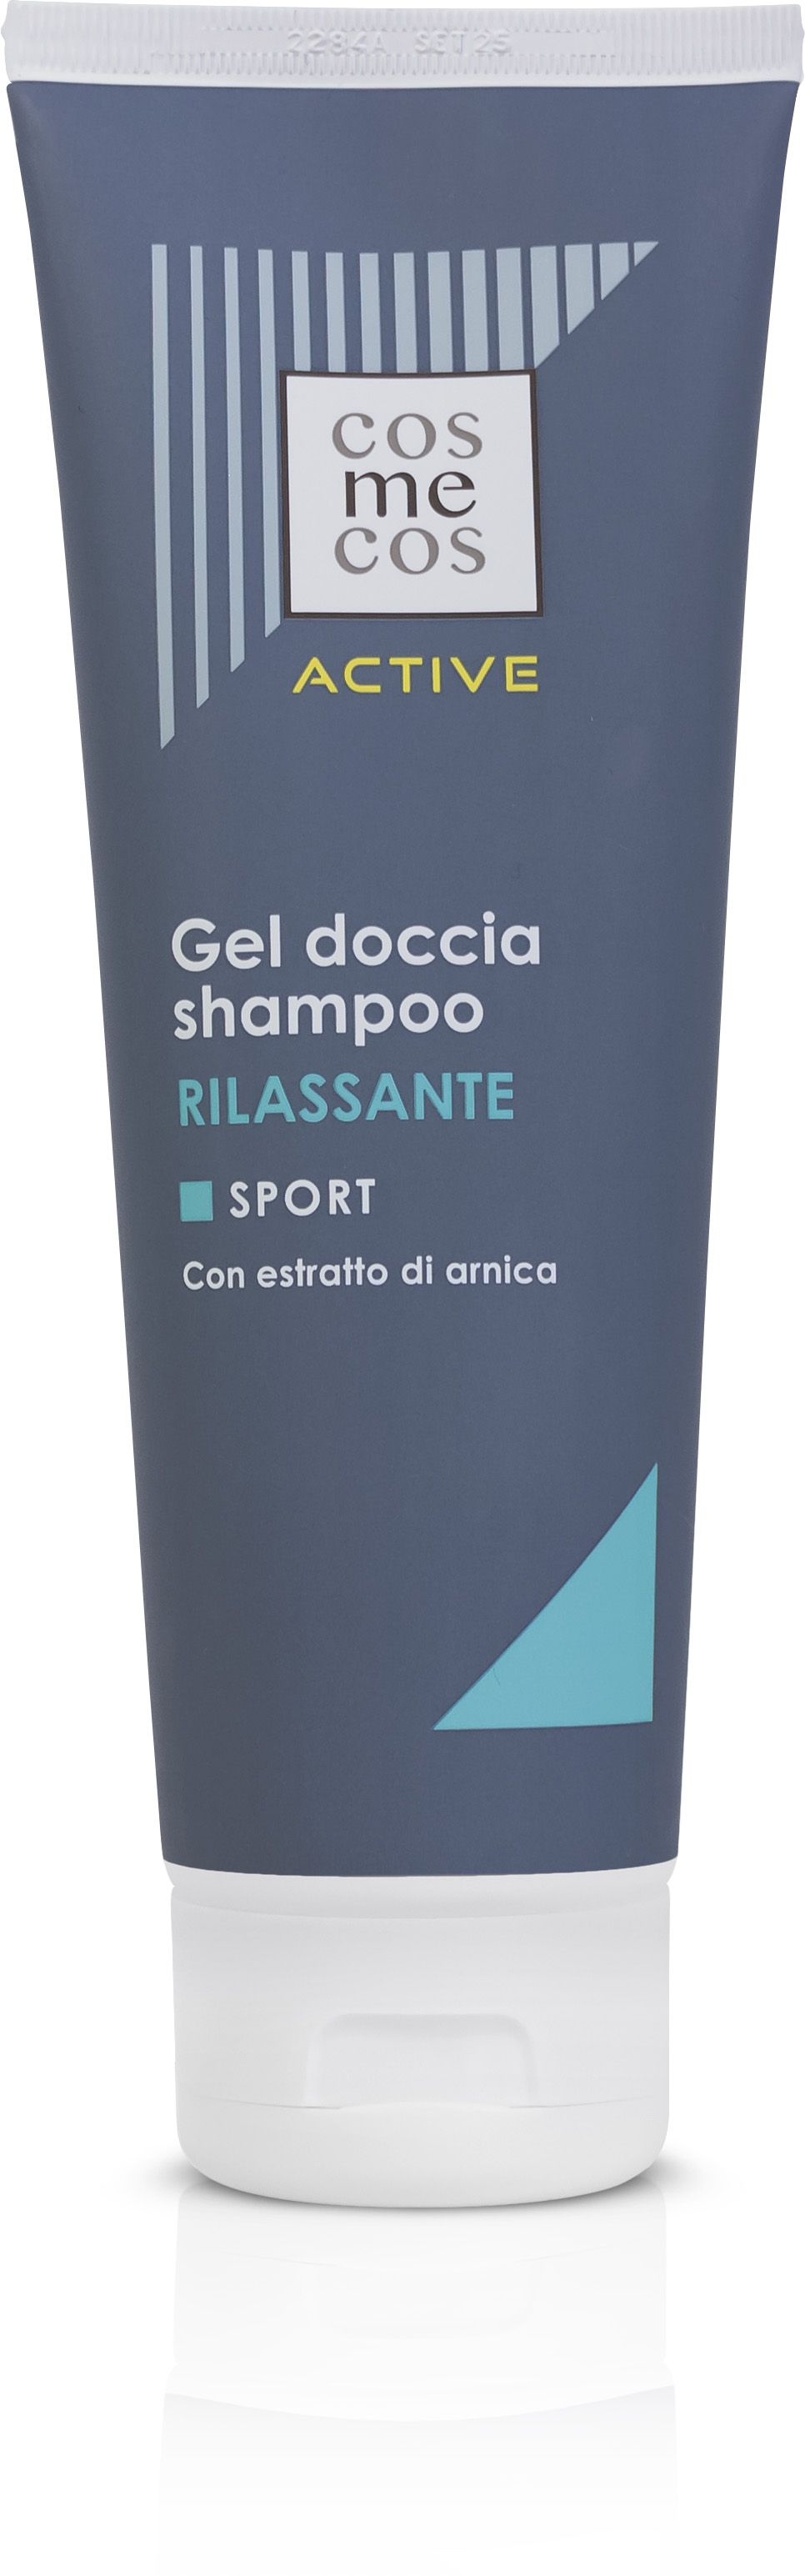 active gel doccia shampoo rilassante sport di cosmecos